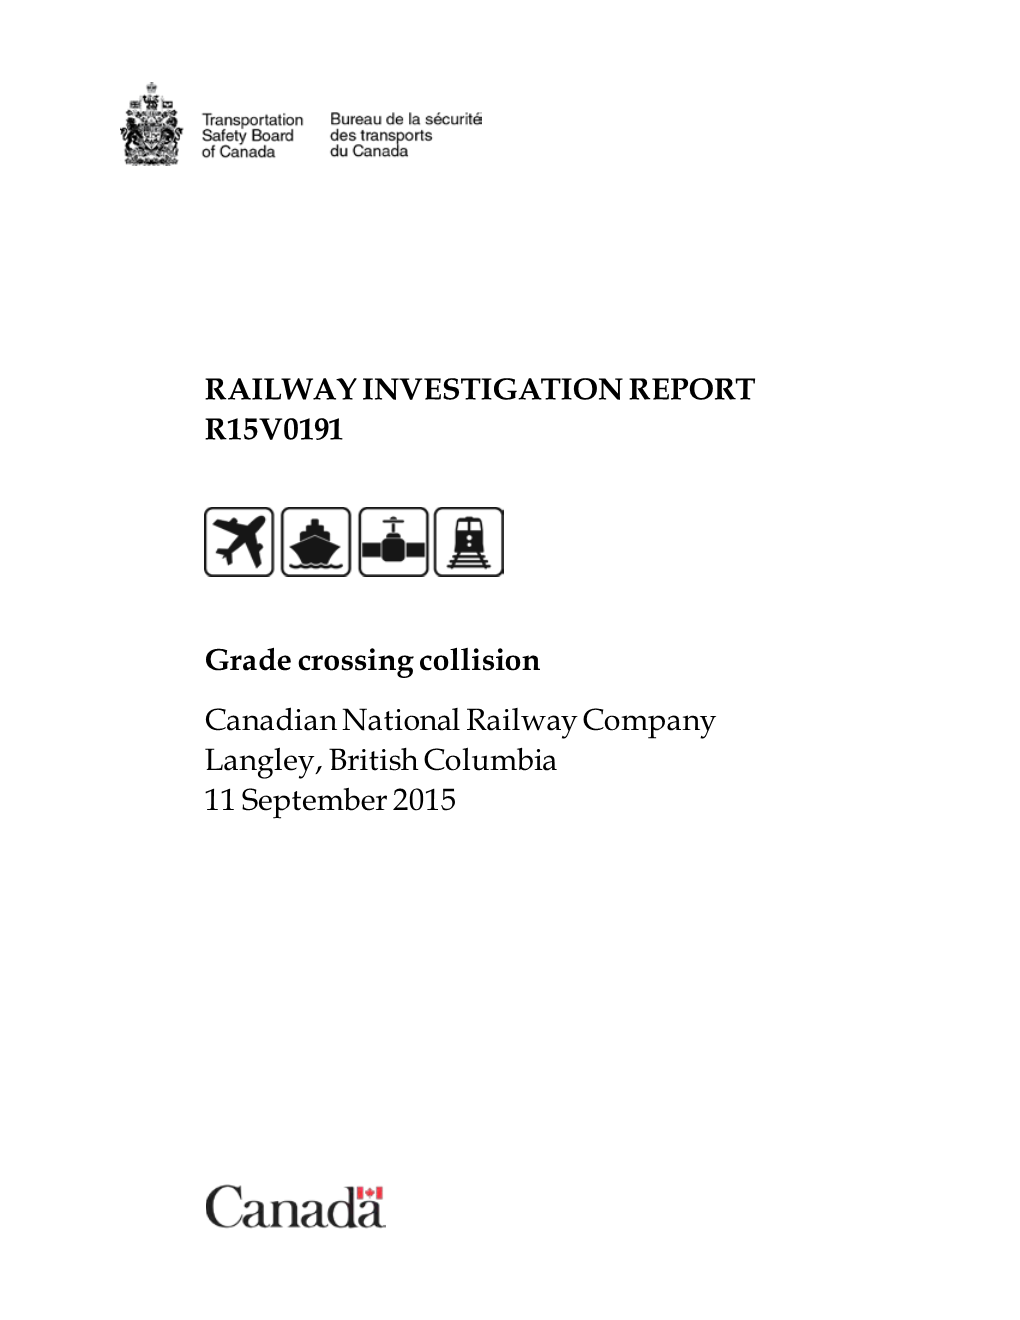 RAILWAY INVESTIGATION REPORT R15V0191 Grade Crossing Collision